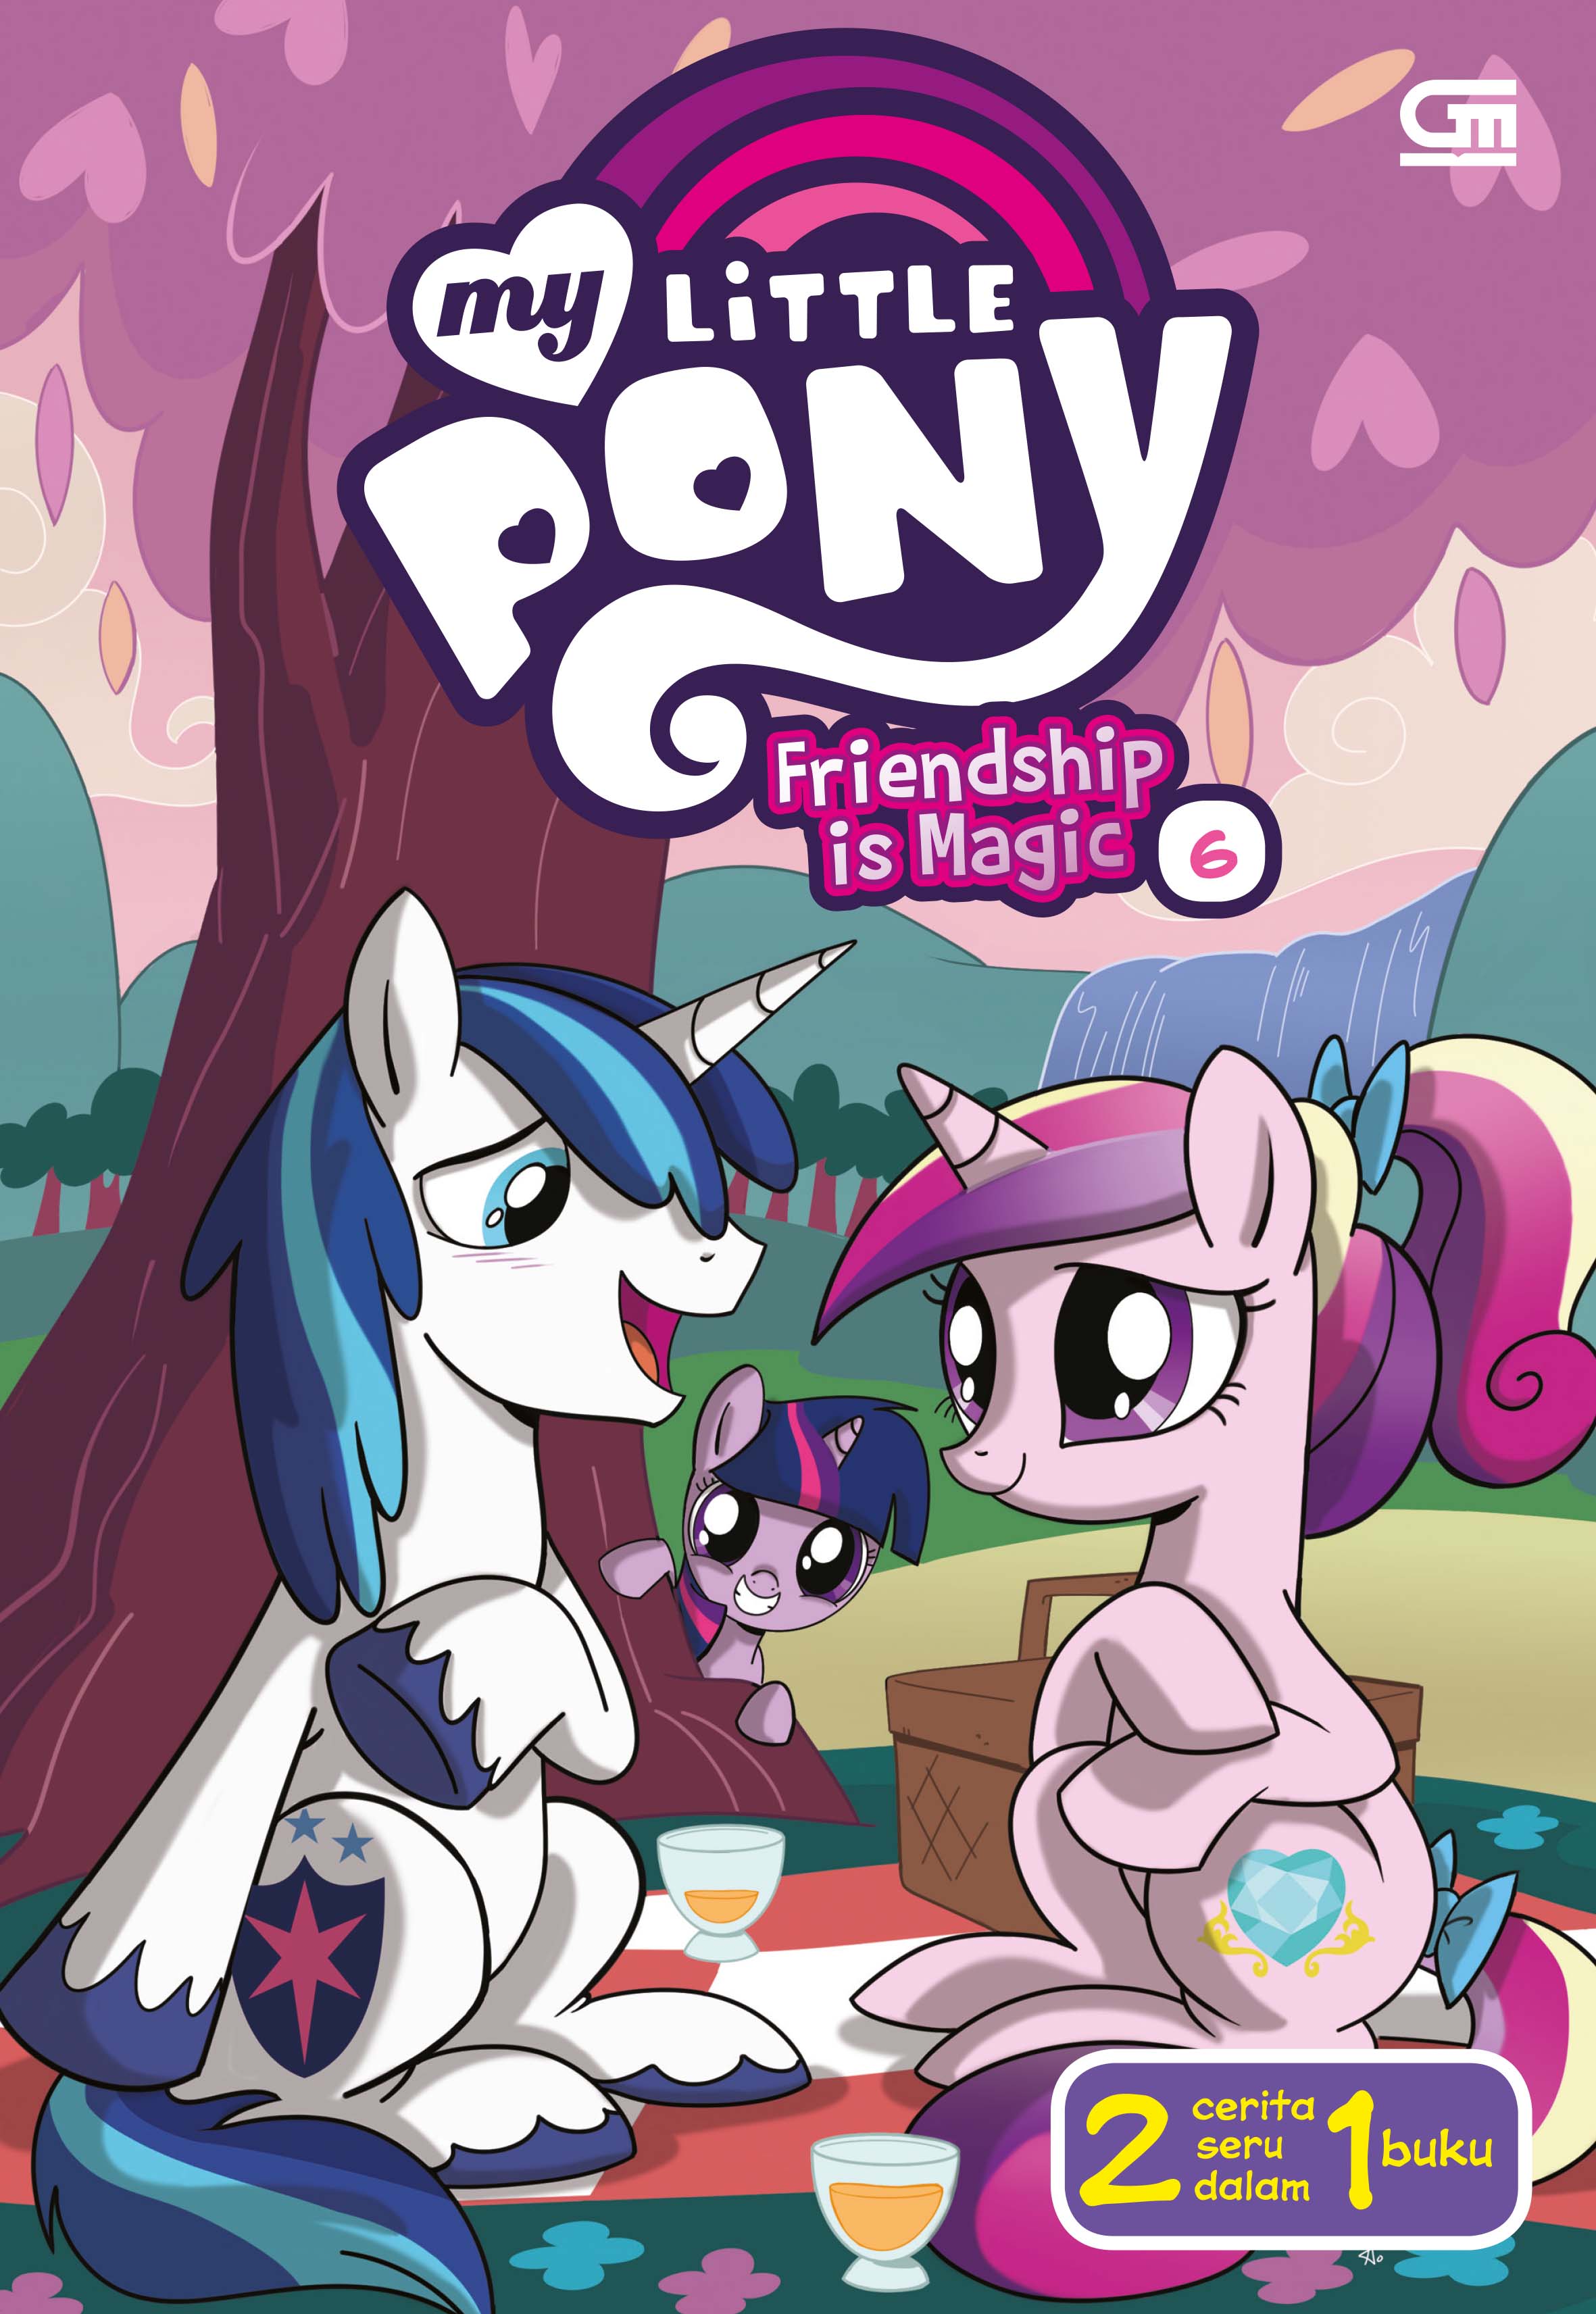 My Little Pony: Friendship is Magic#6